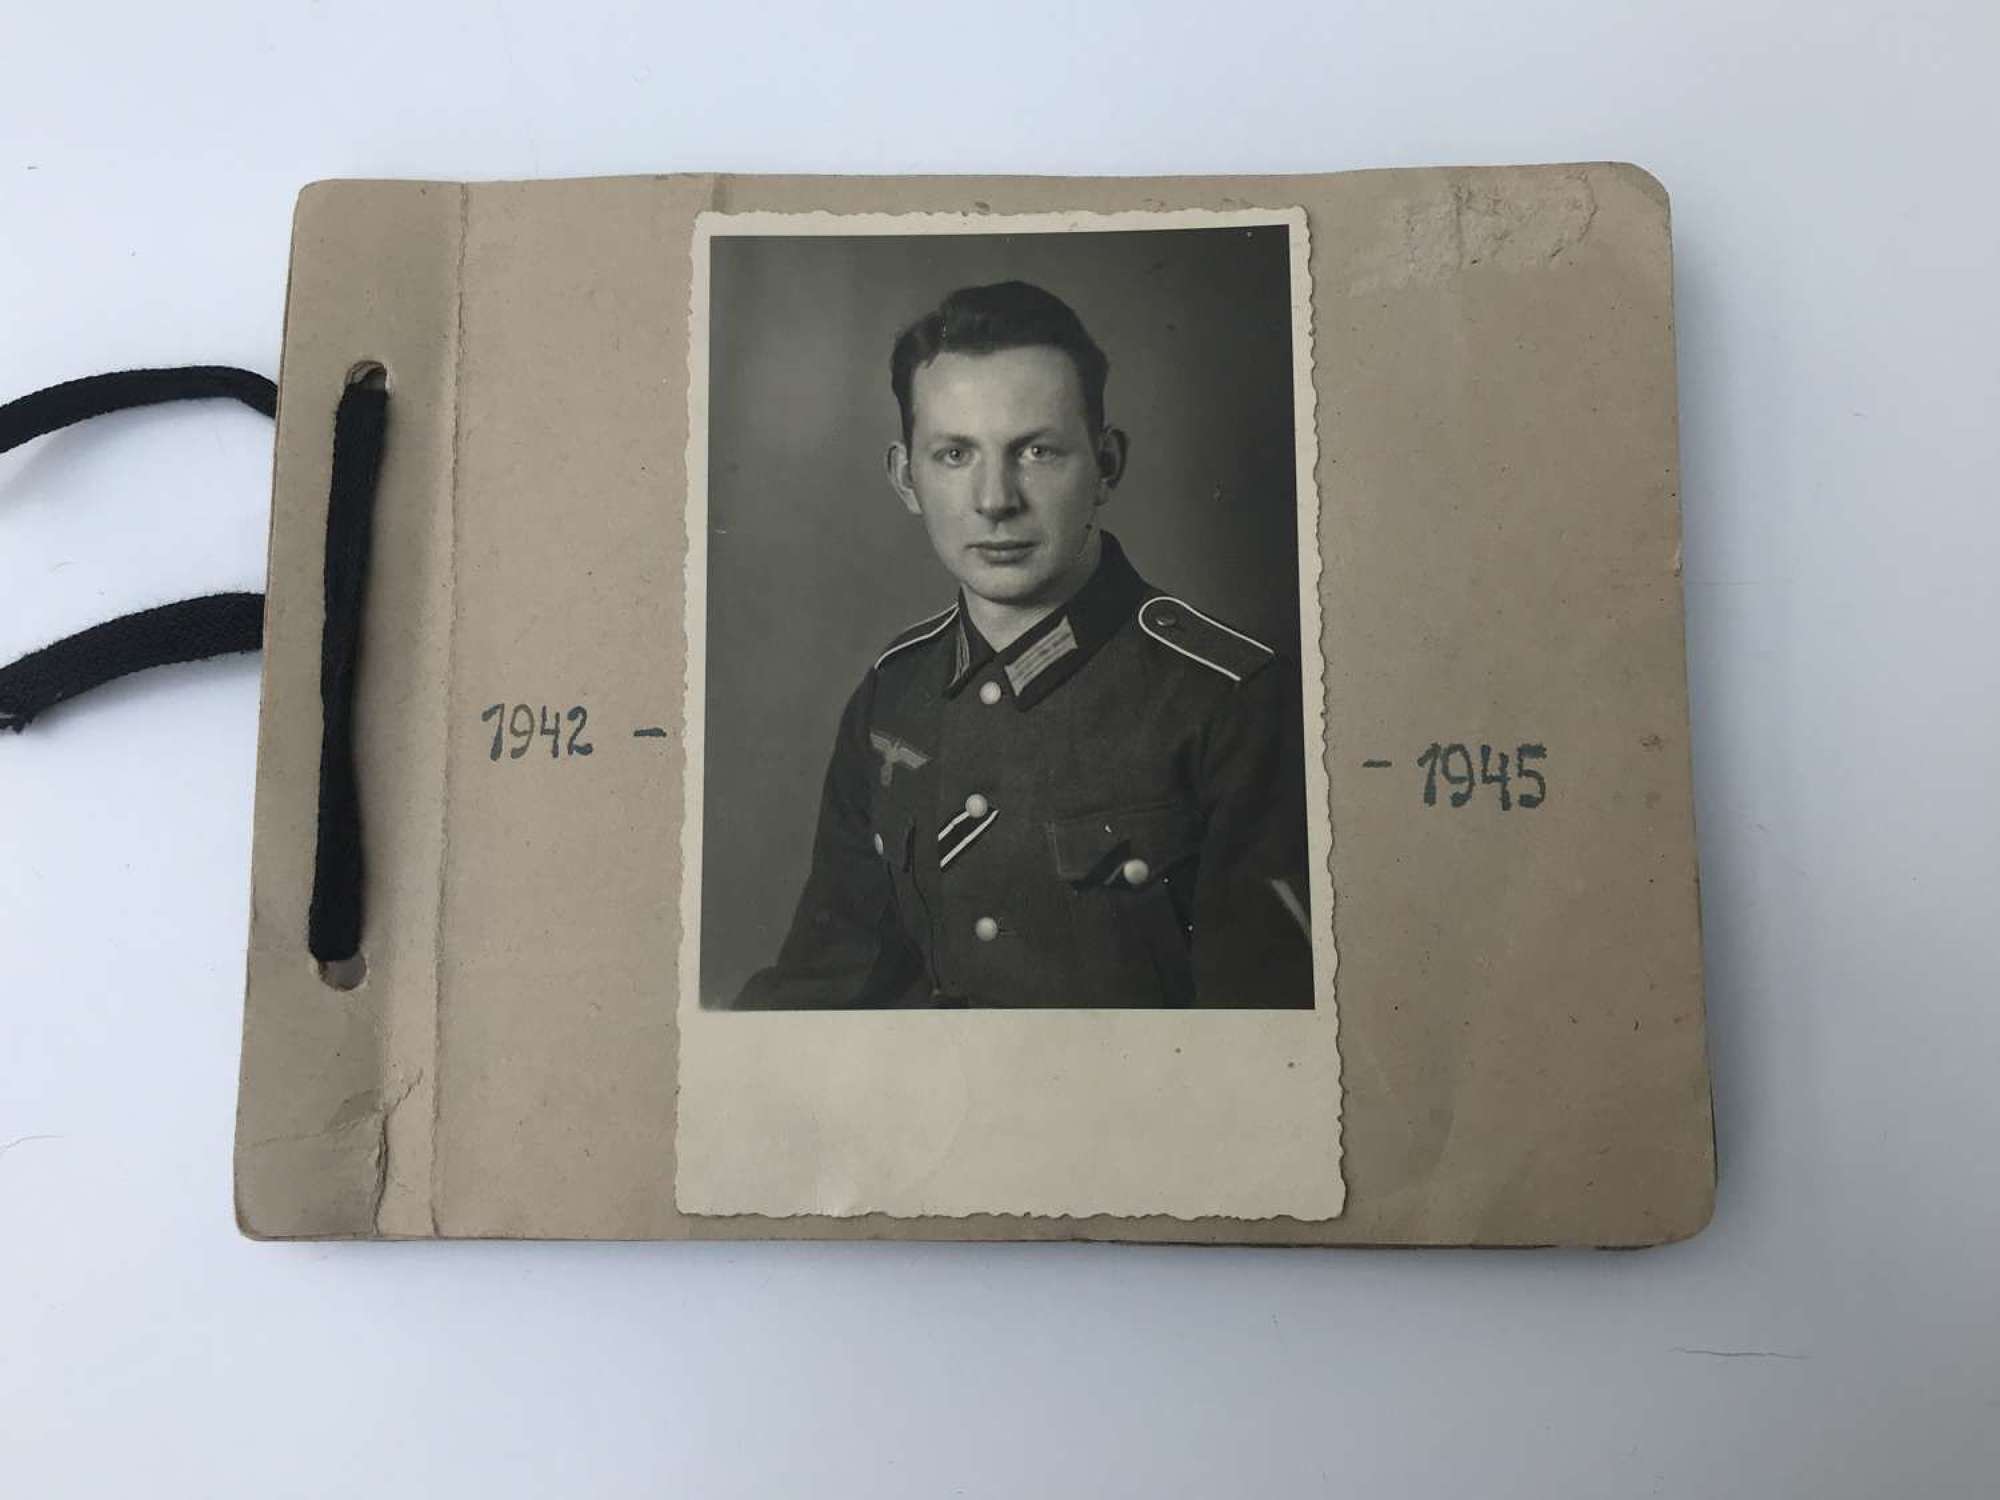 Mid war German Mountain troops photograph album